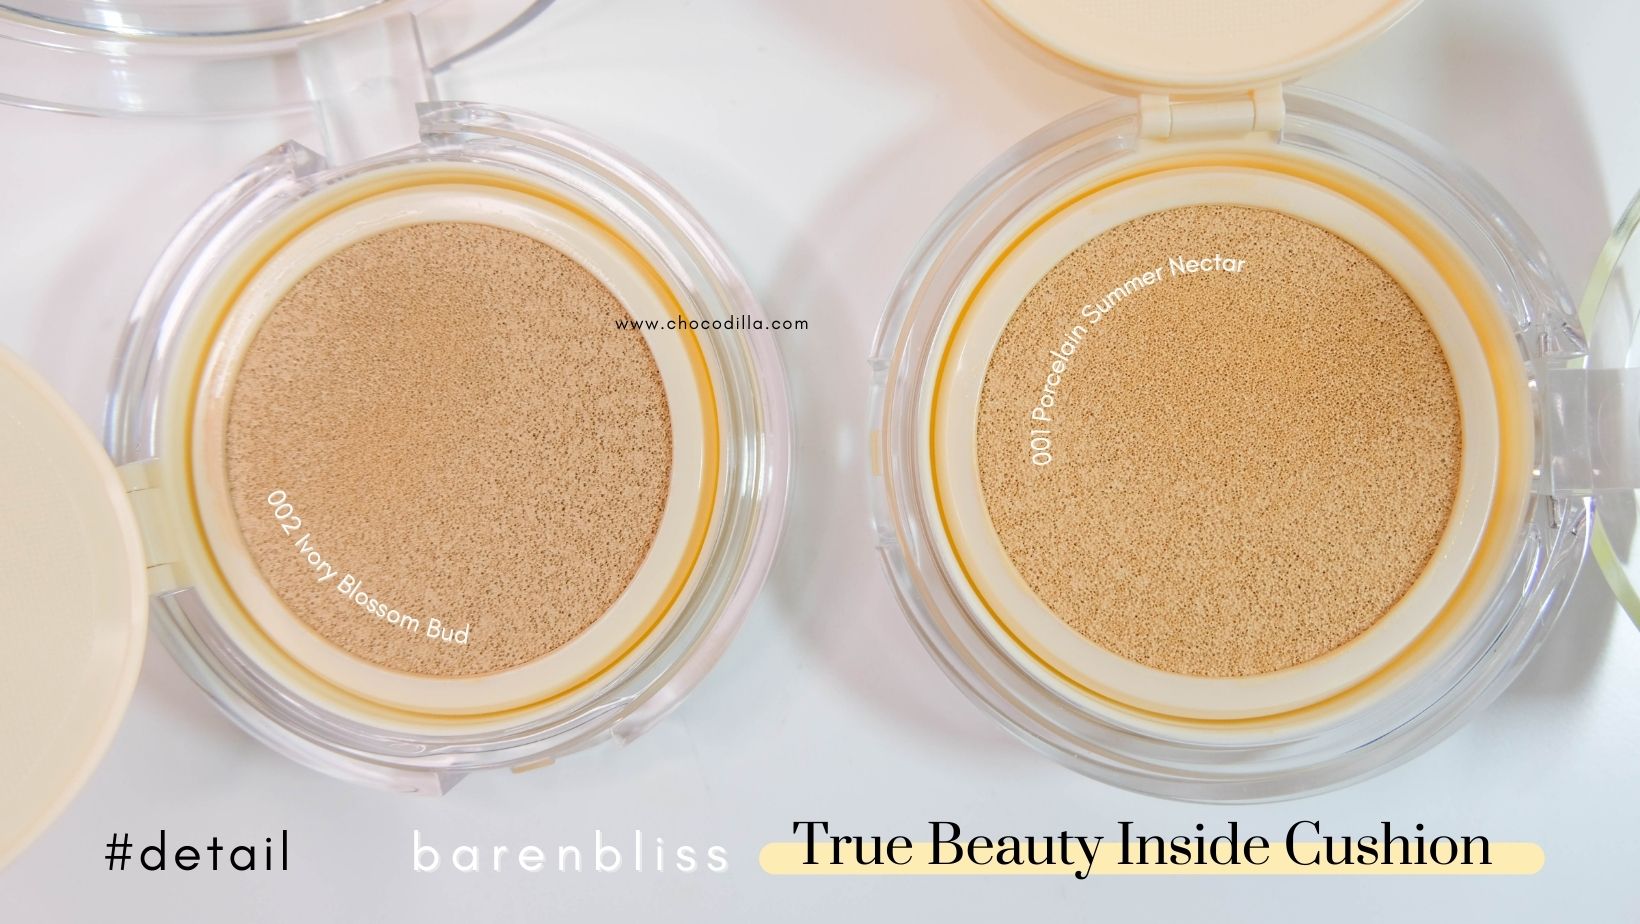 Review barenbliss True Beauty Inside Cushion